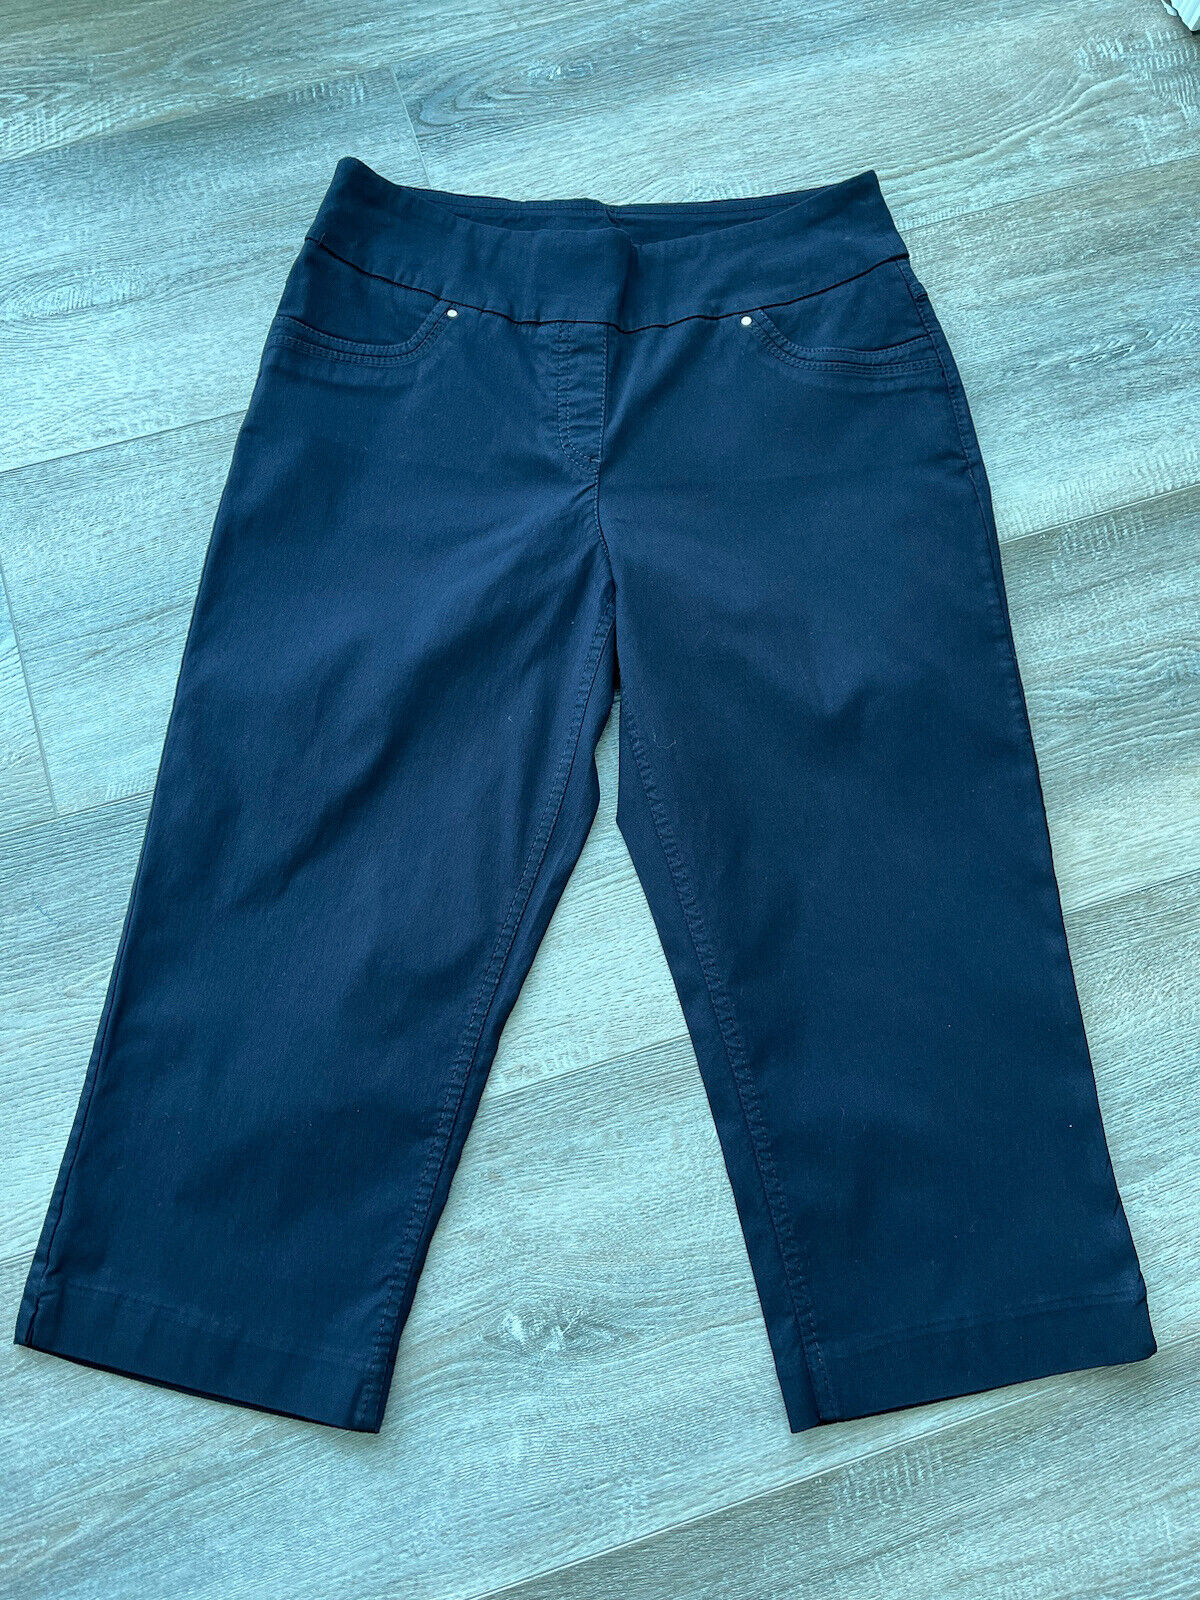 EUC Westbound Capri Pants - Size 10P - Black - image 1